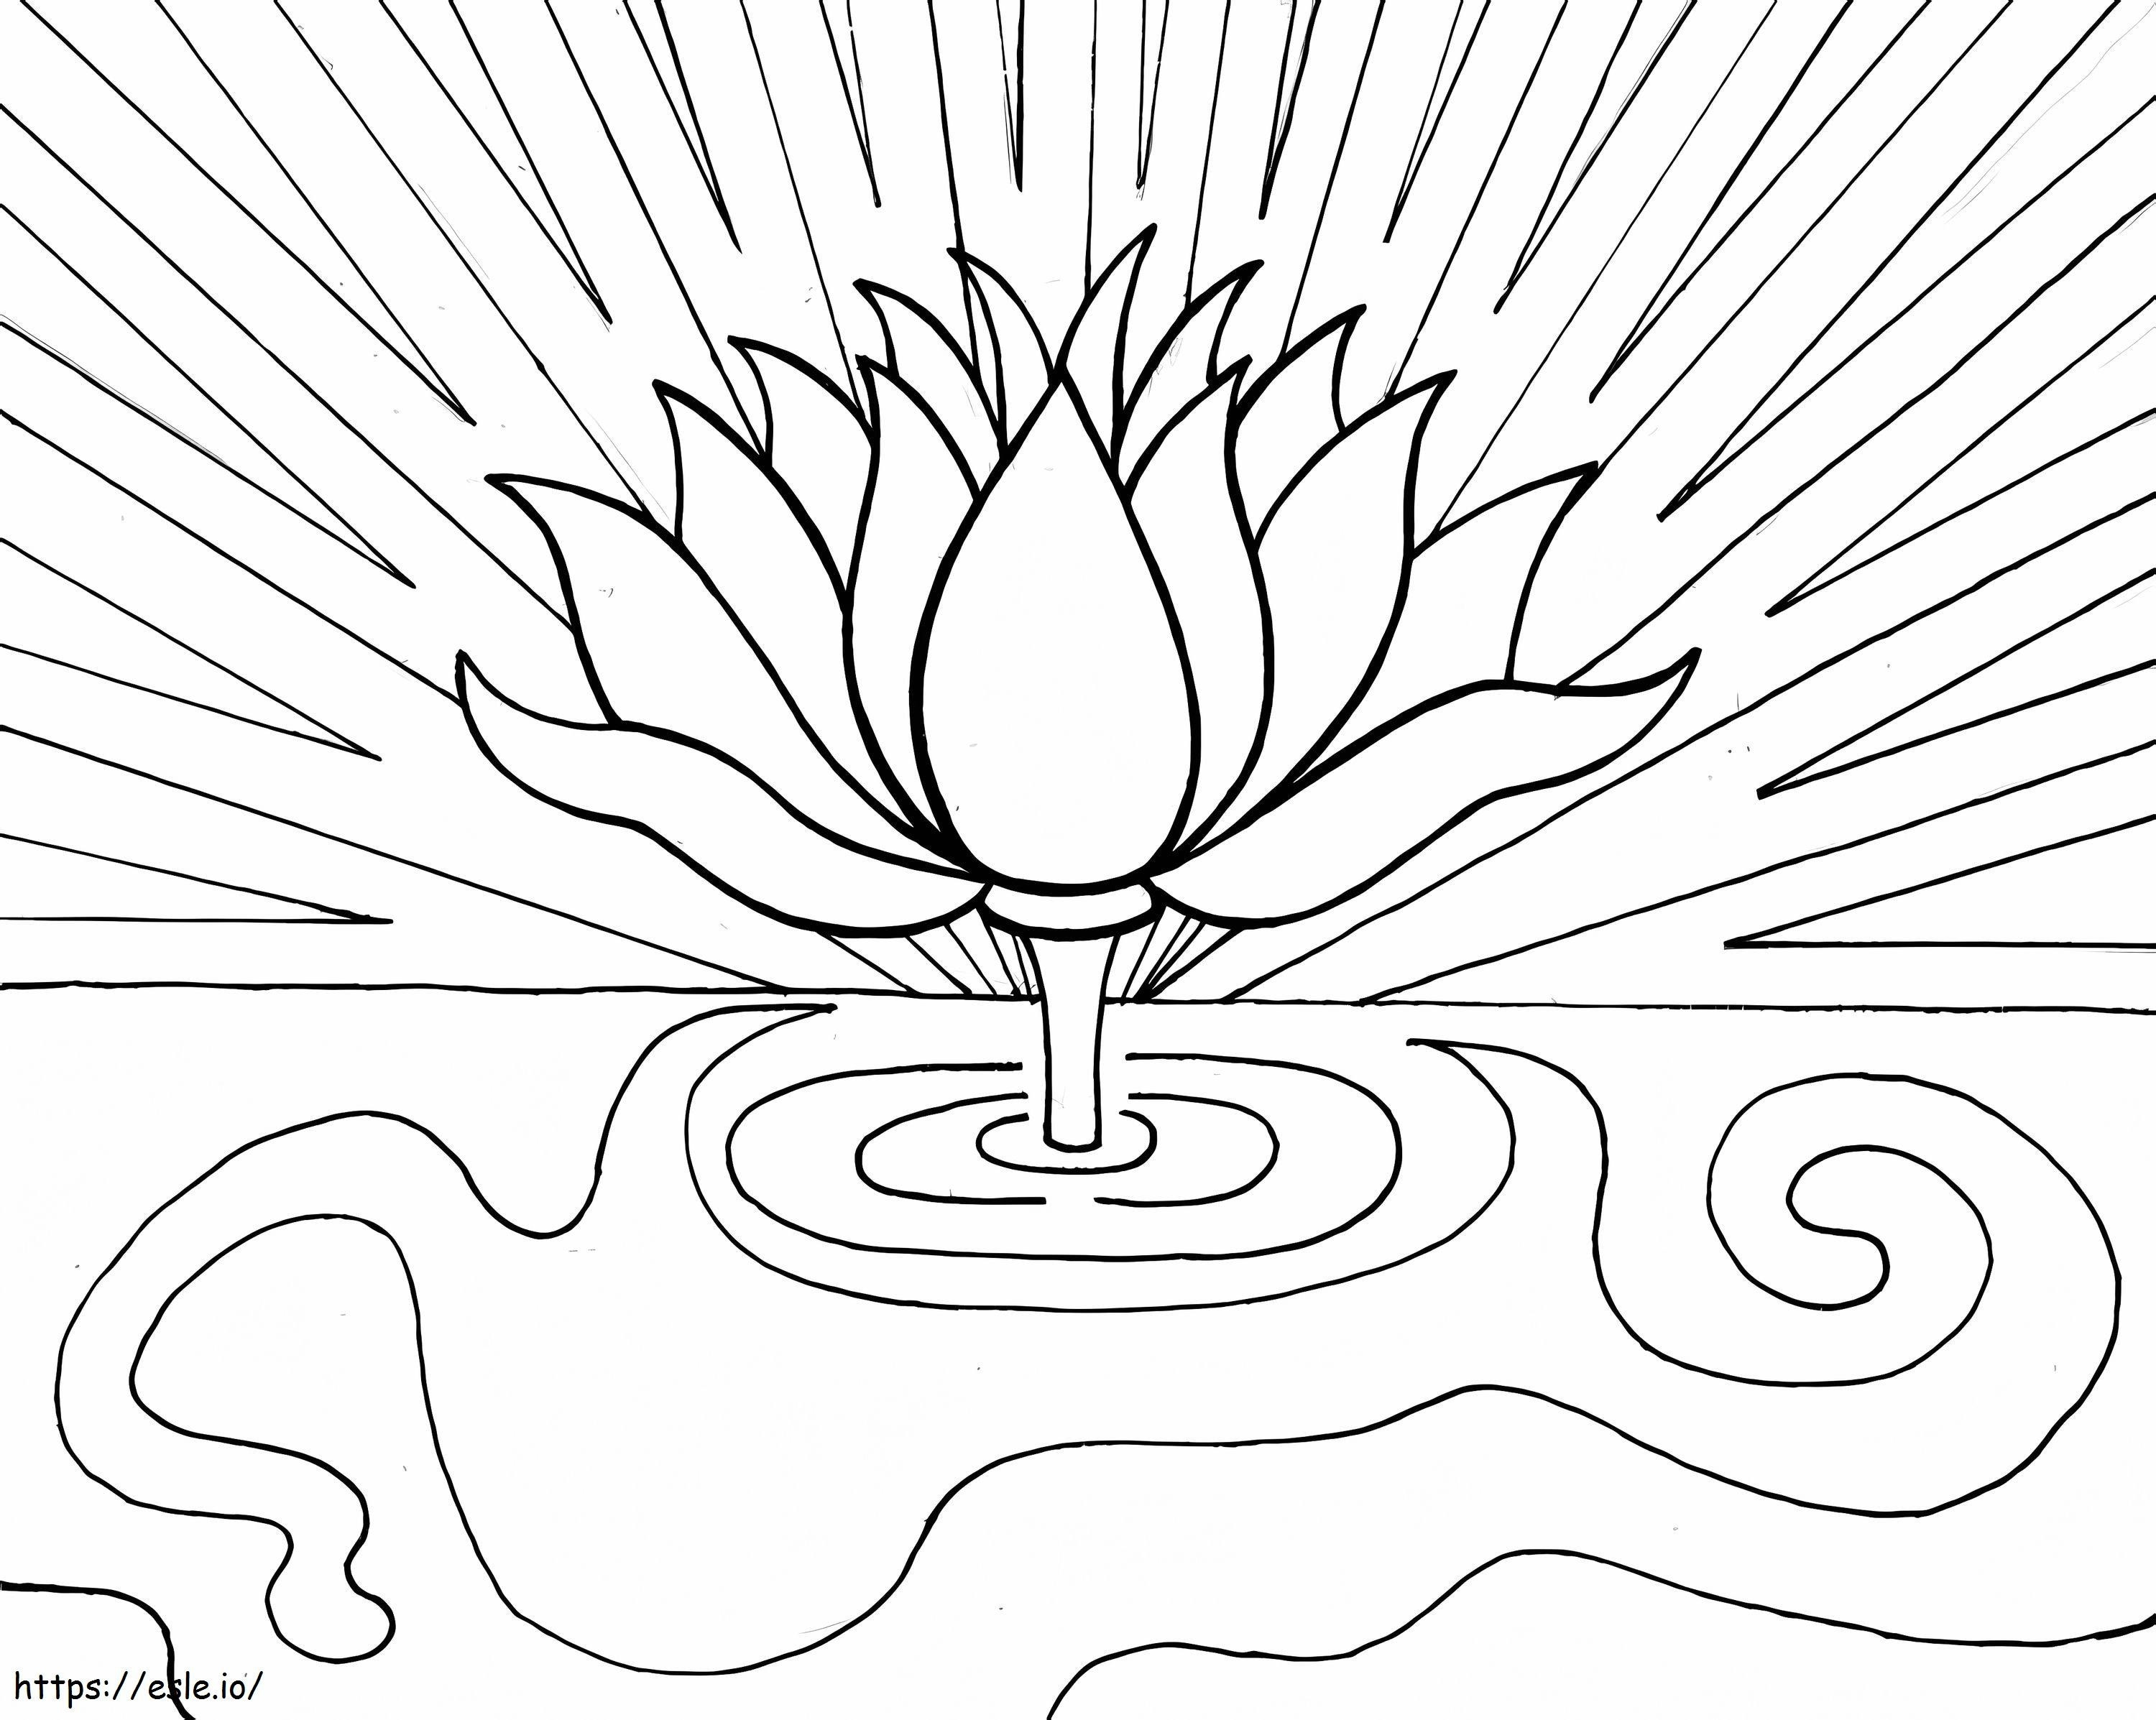 Wundervoller Lotus ausmalbilder